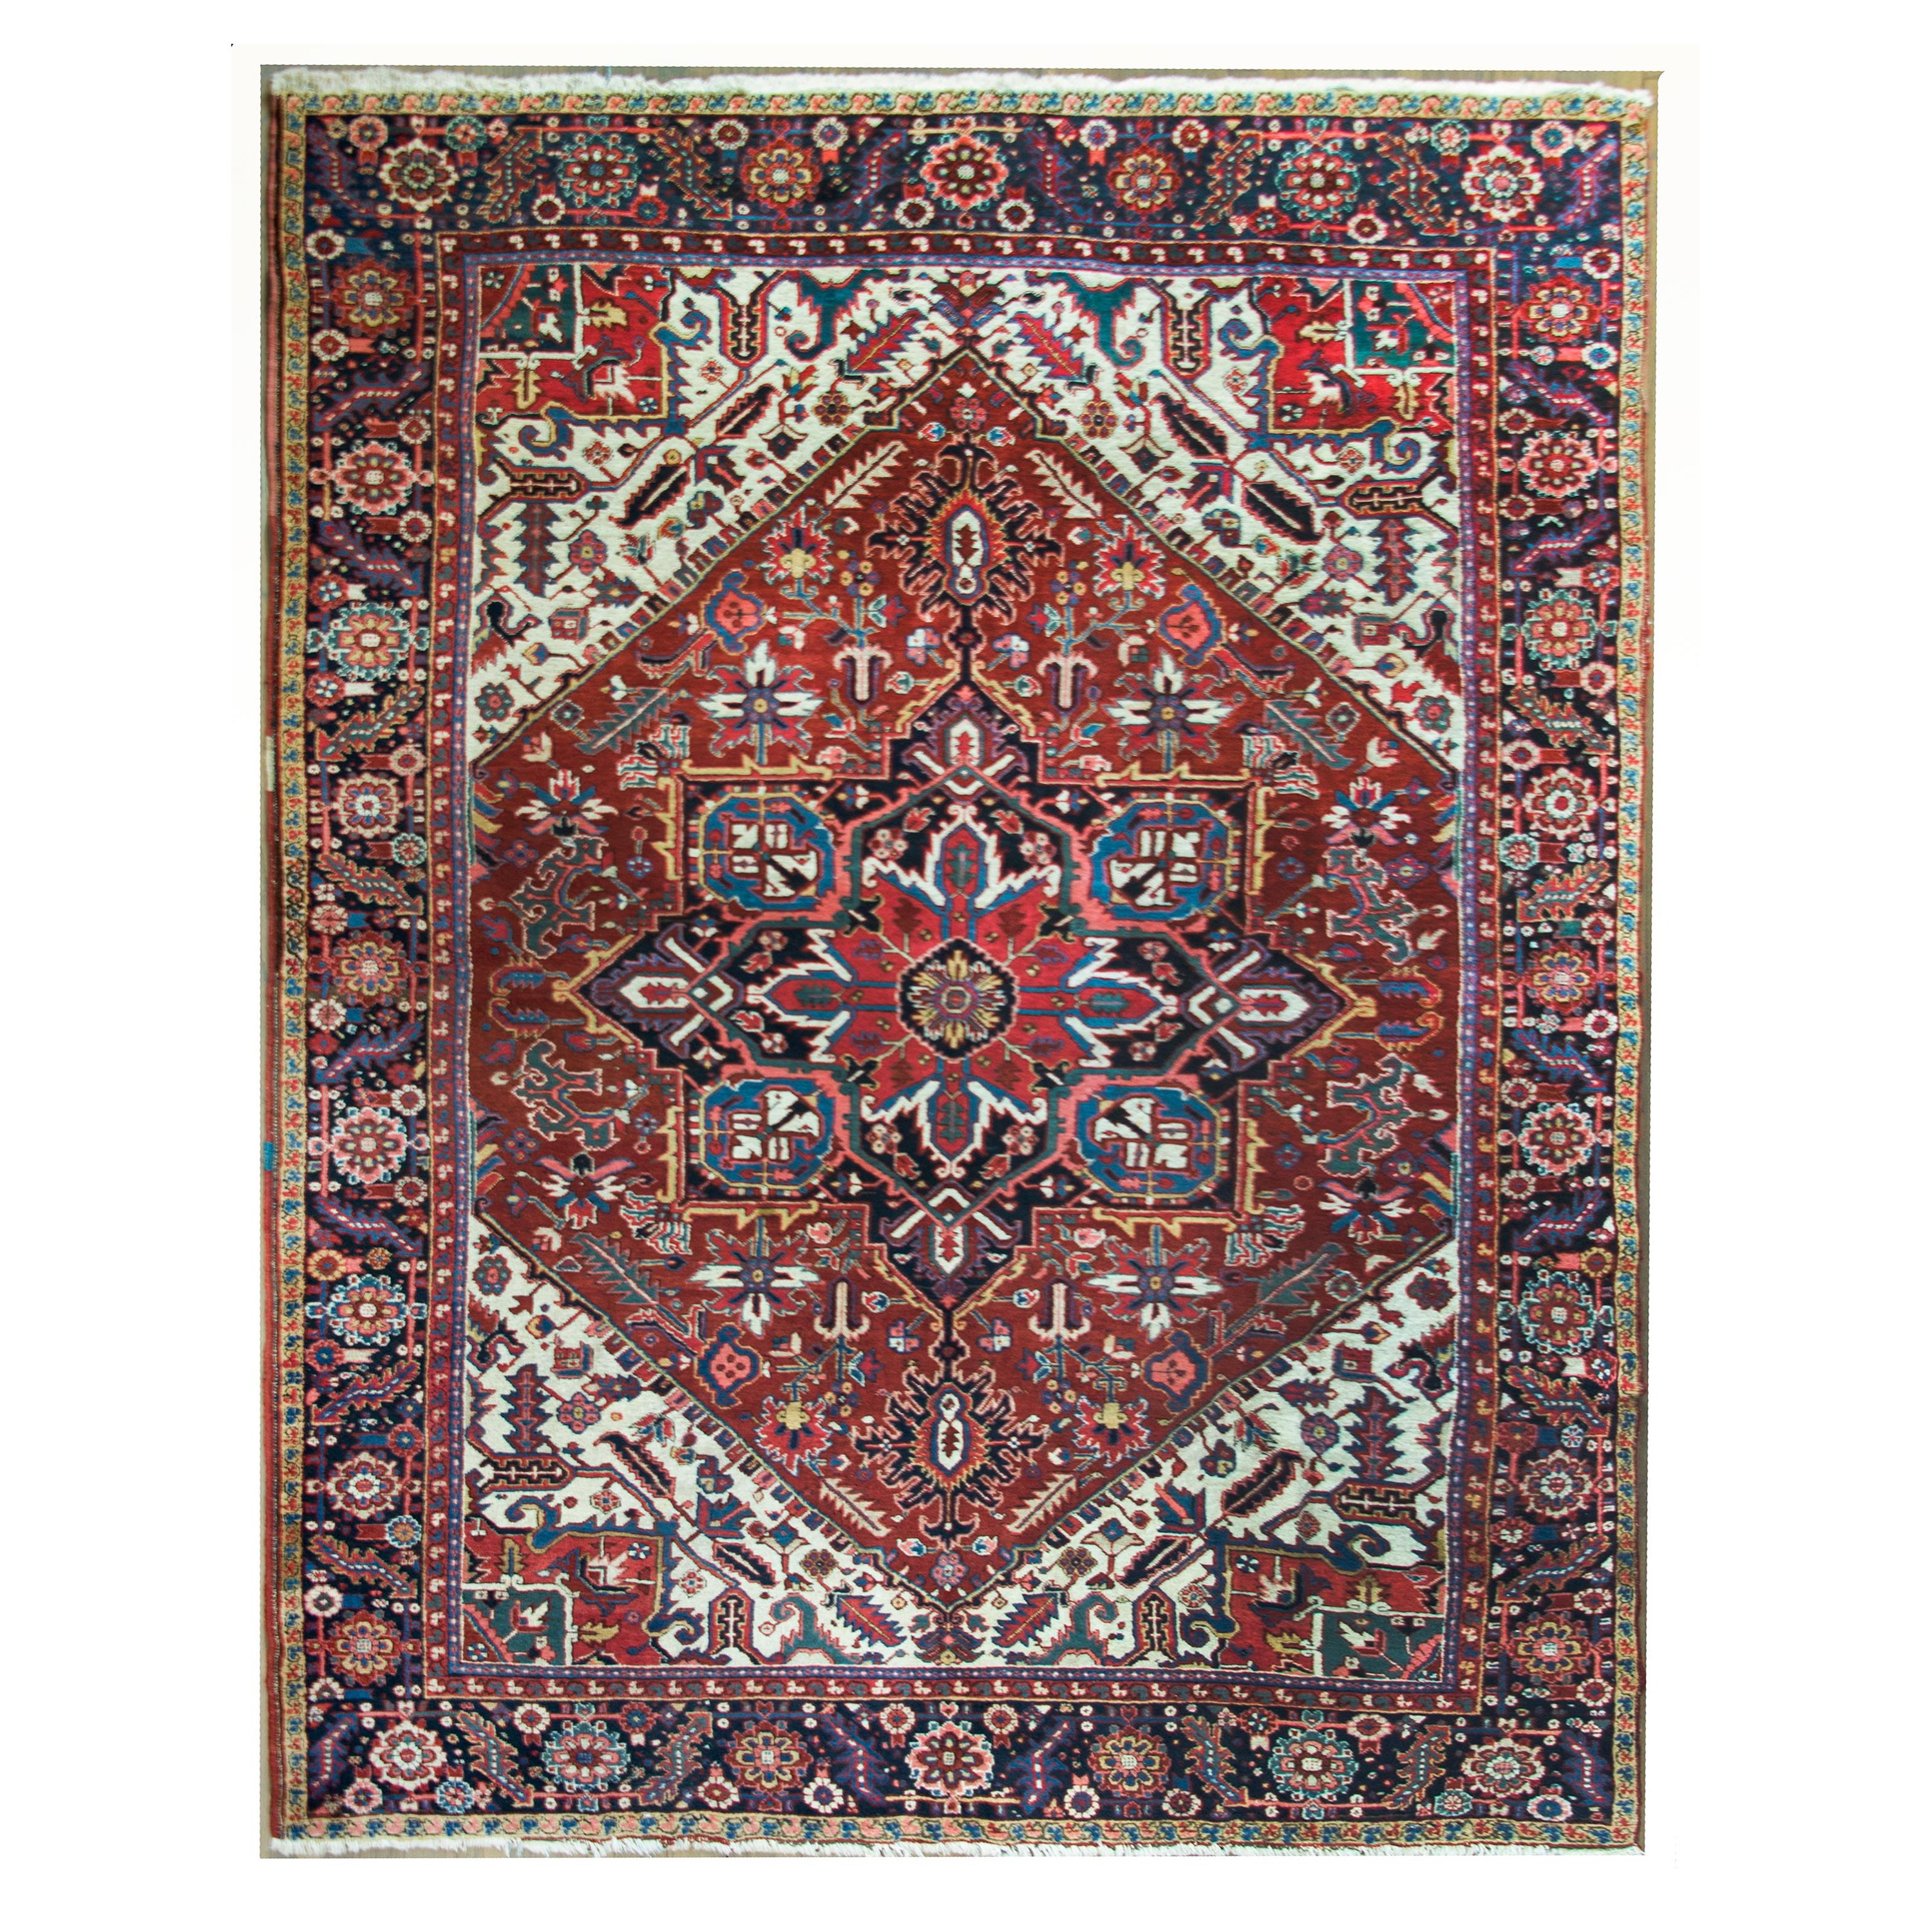 Early 20th Century Persian Heriz Rug